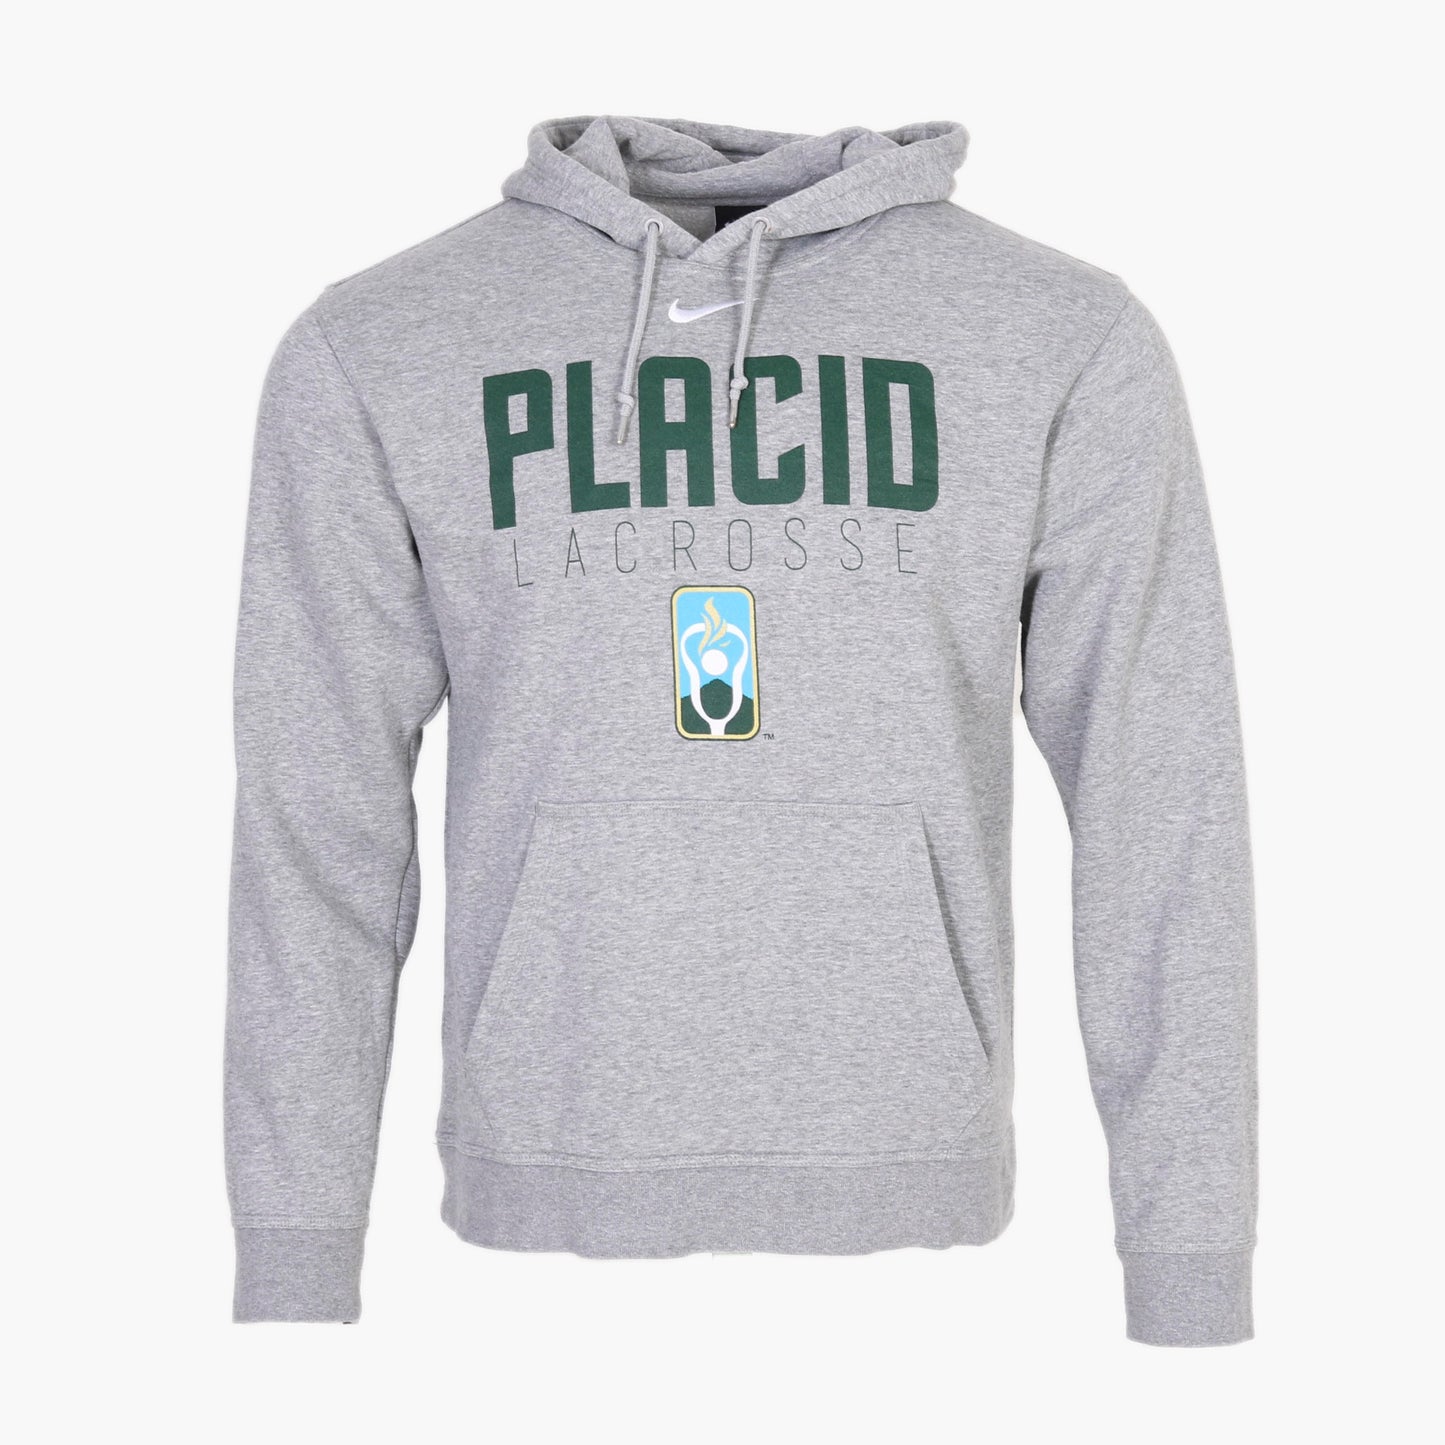 'Placid Lacrosse' Sweatshirt - American Madness